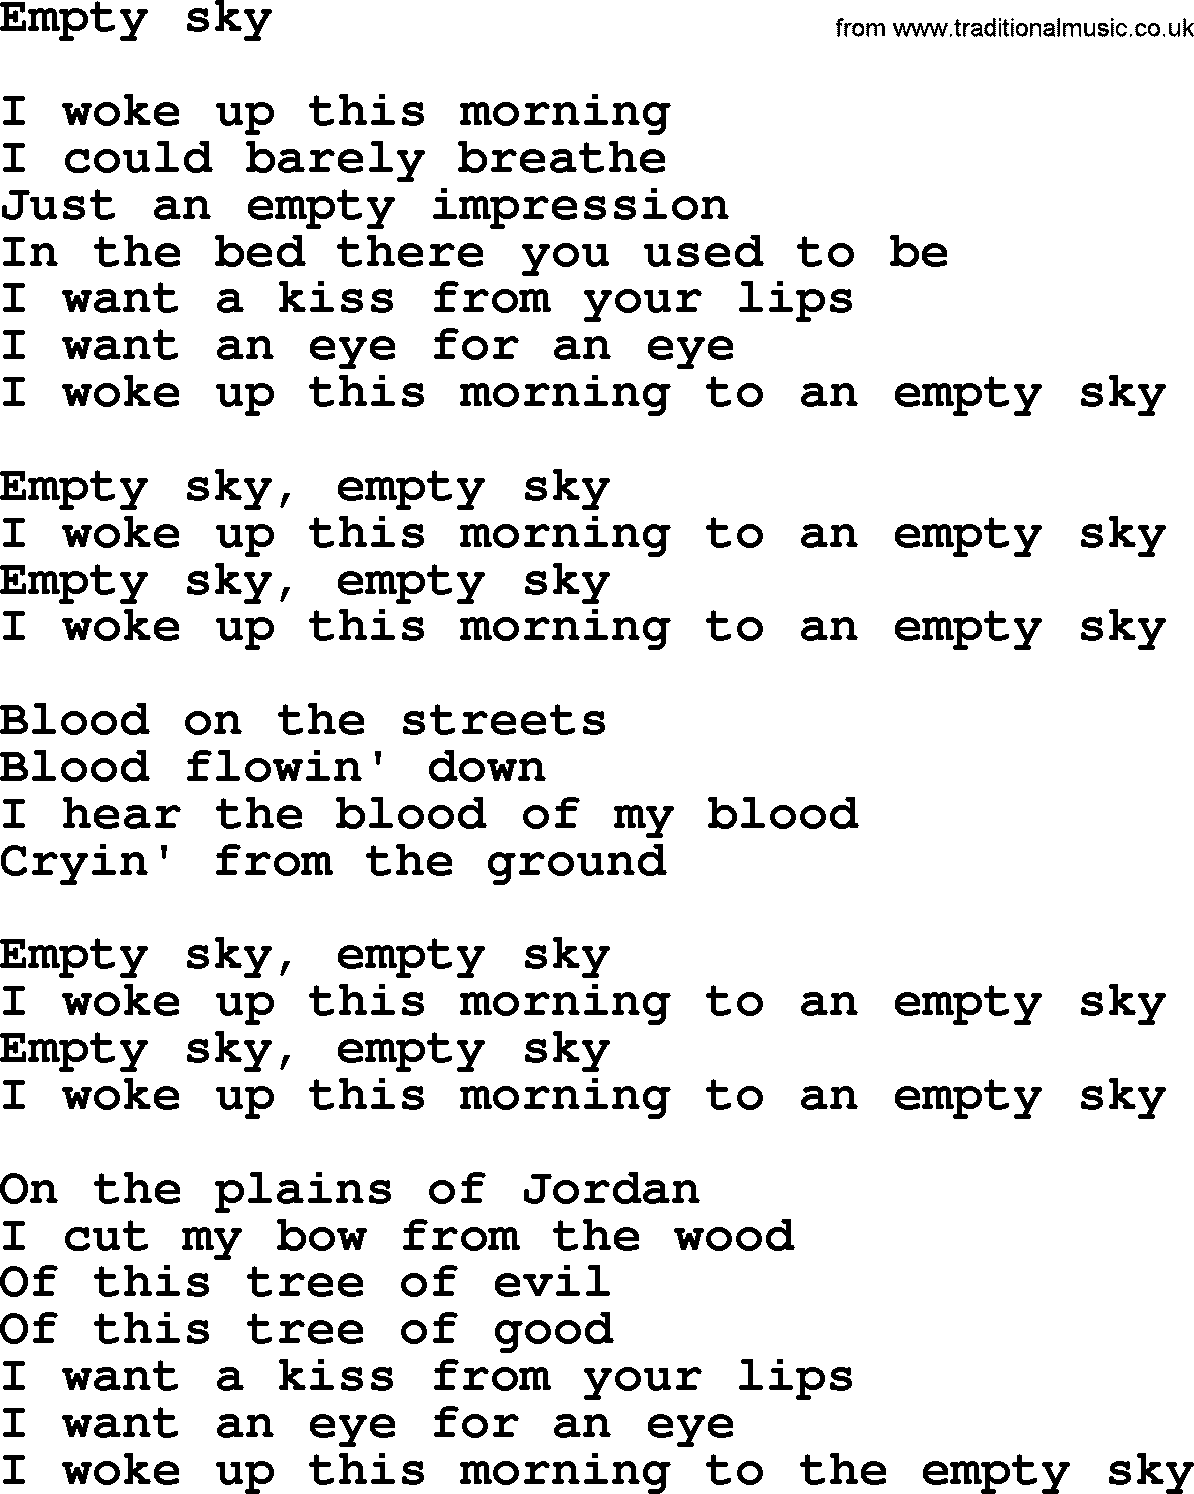 Bruce Springsteen song: Empty Sky lyrics